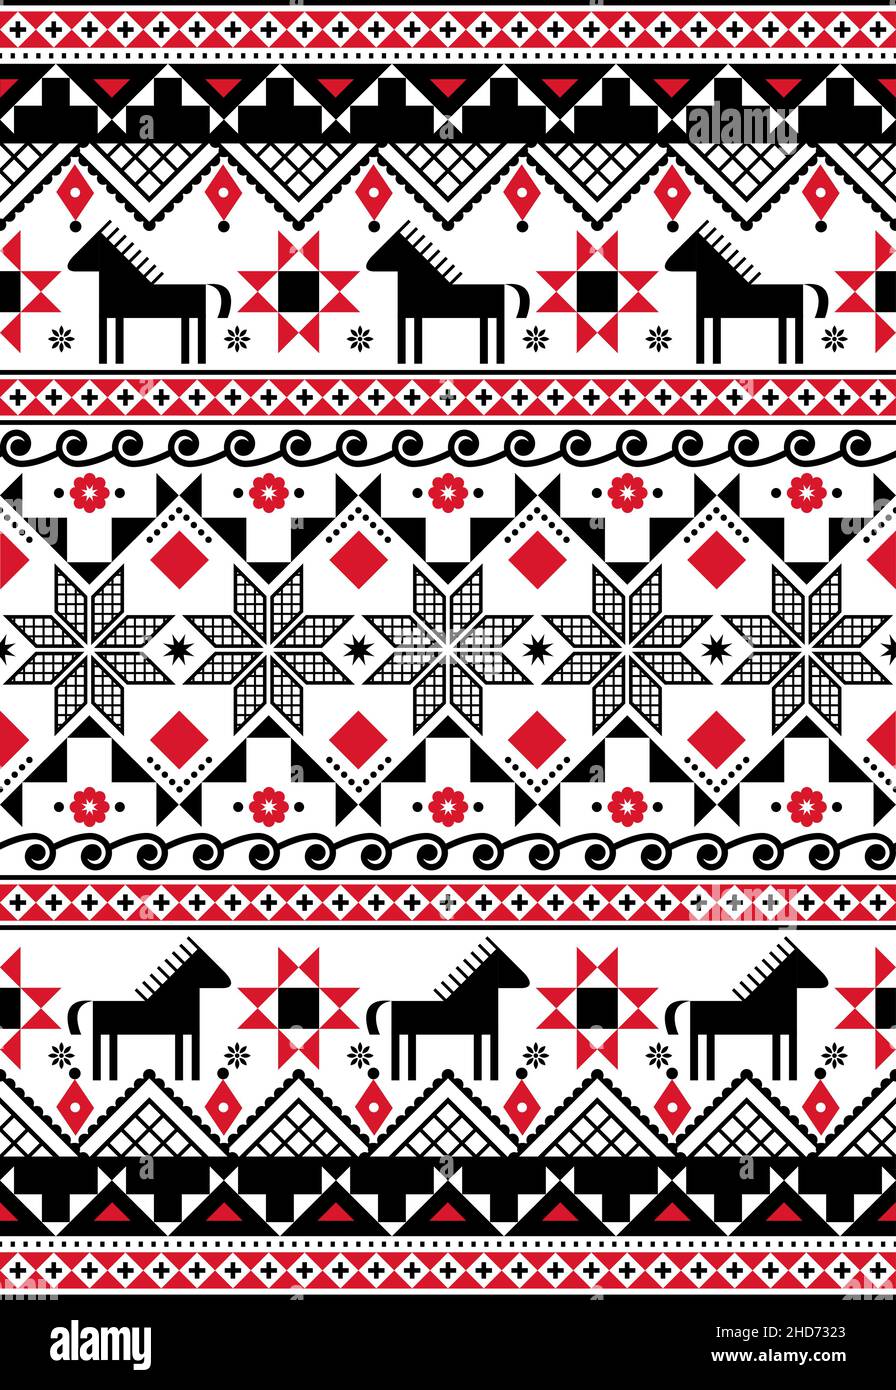 Ukrainische Hutsul Pysanky Vektor nahtlose Muster mit Pferden und geometrischen Formen, Volkskunst Ostereier repetitive Design Stock Vektor